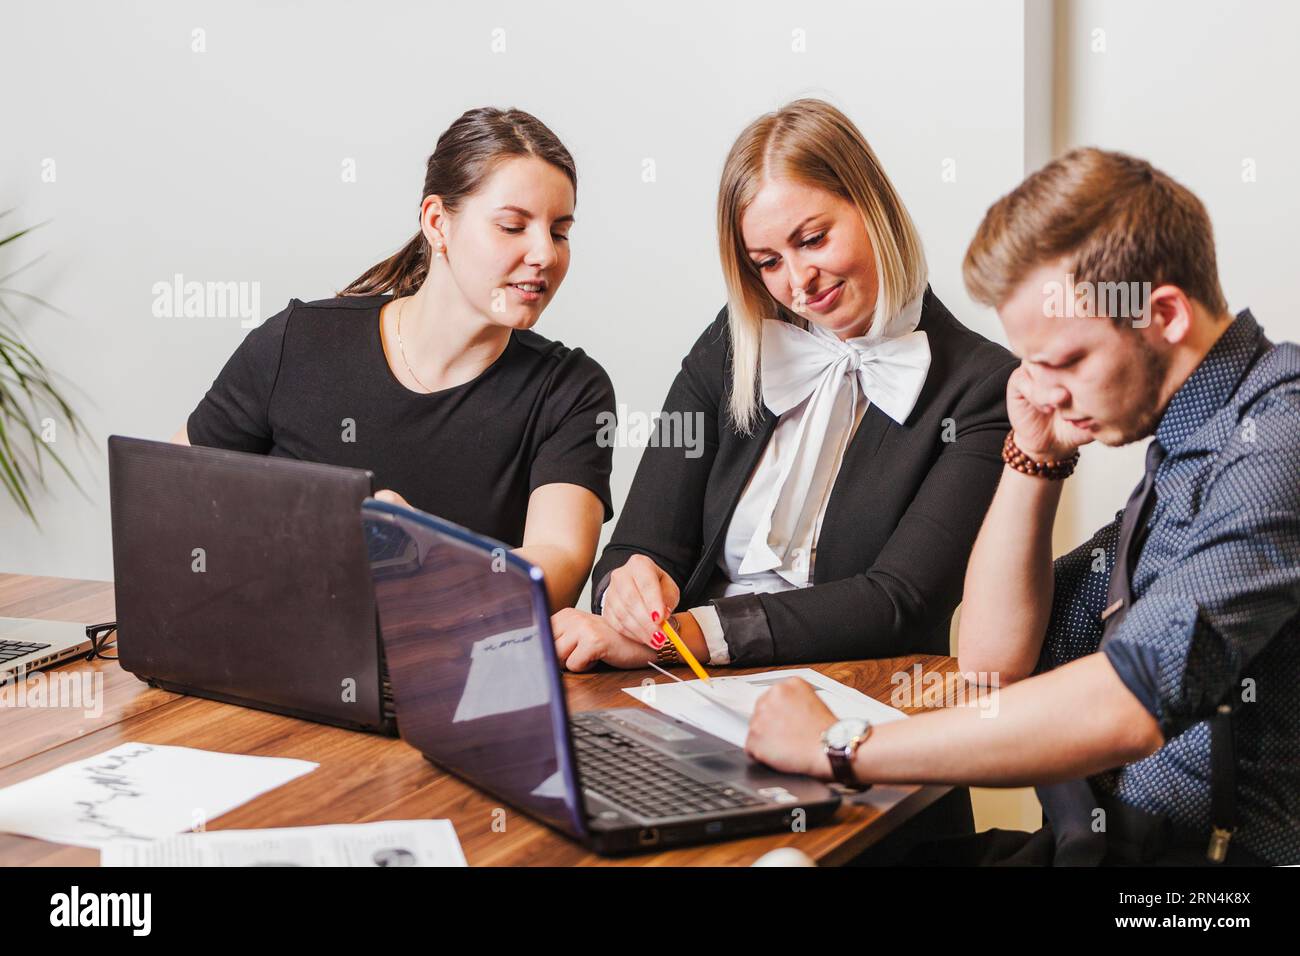 People sitting desk talking Stock Photo